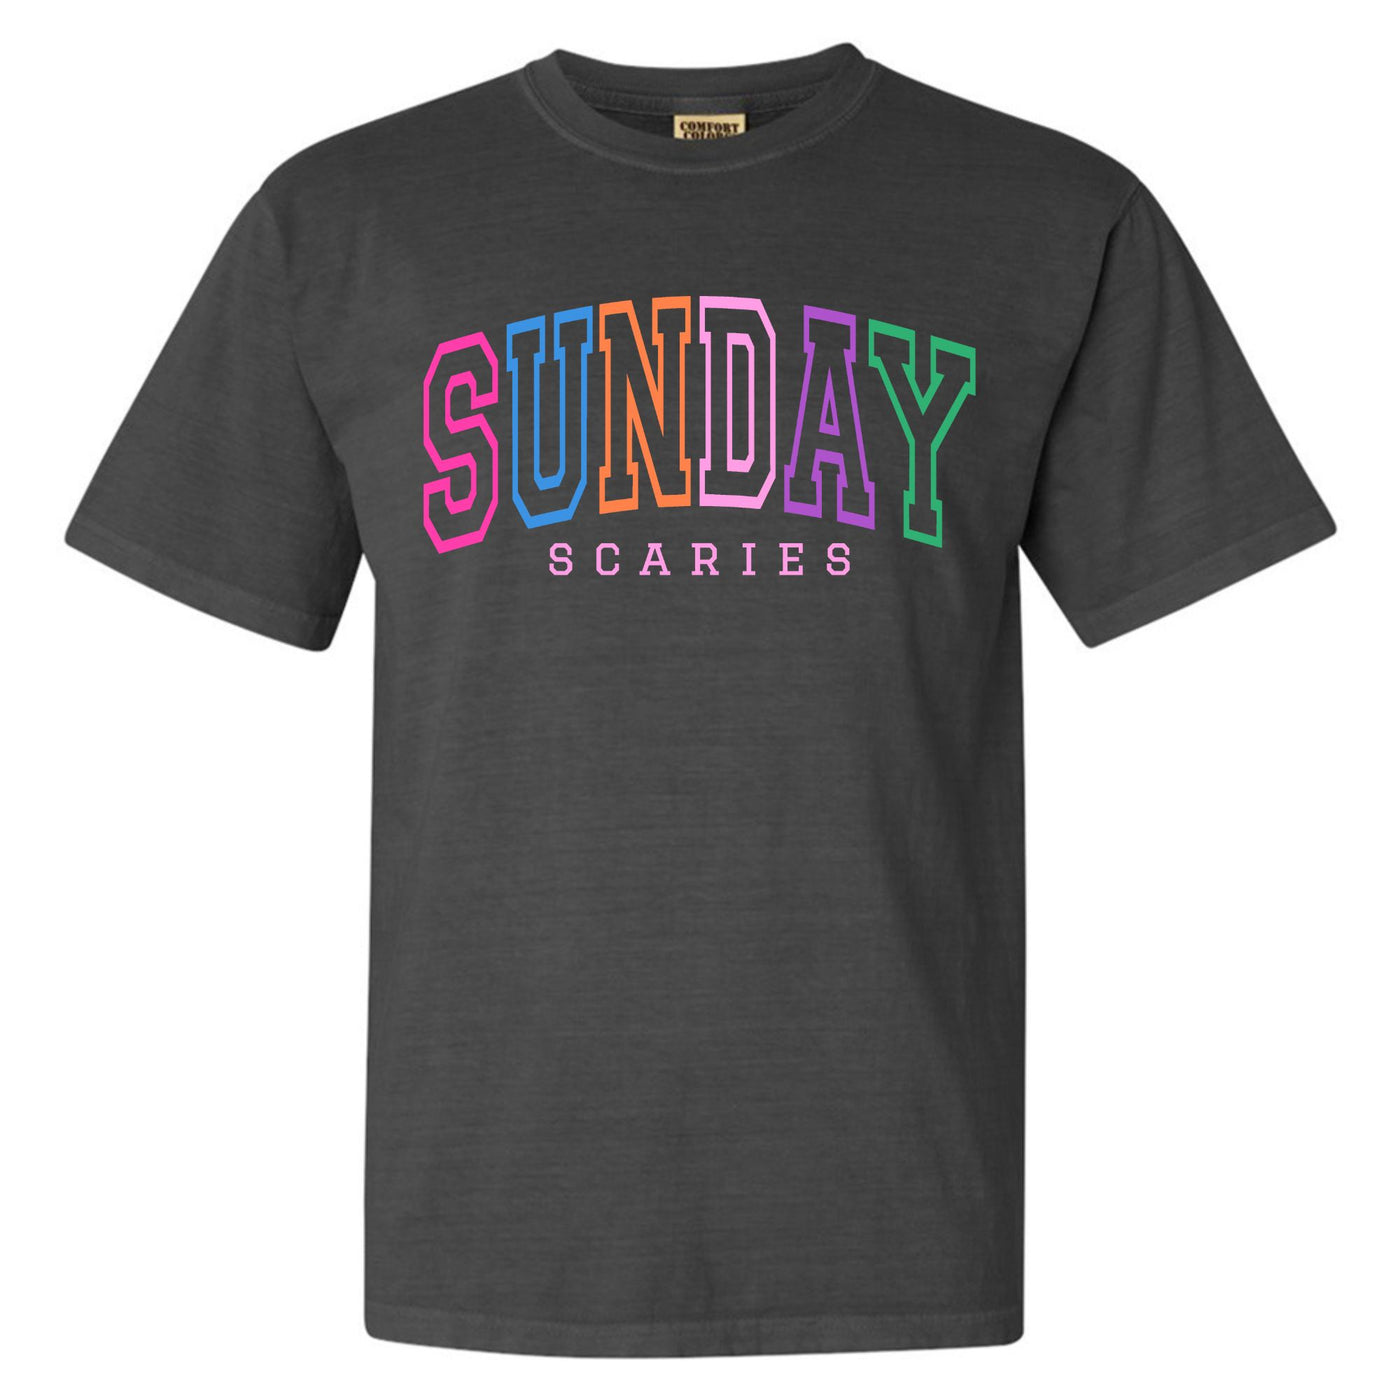 'Sunday Scaries' T-Shirt